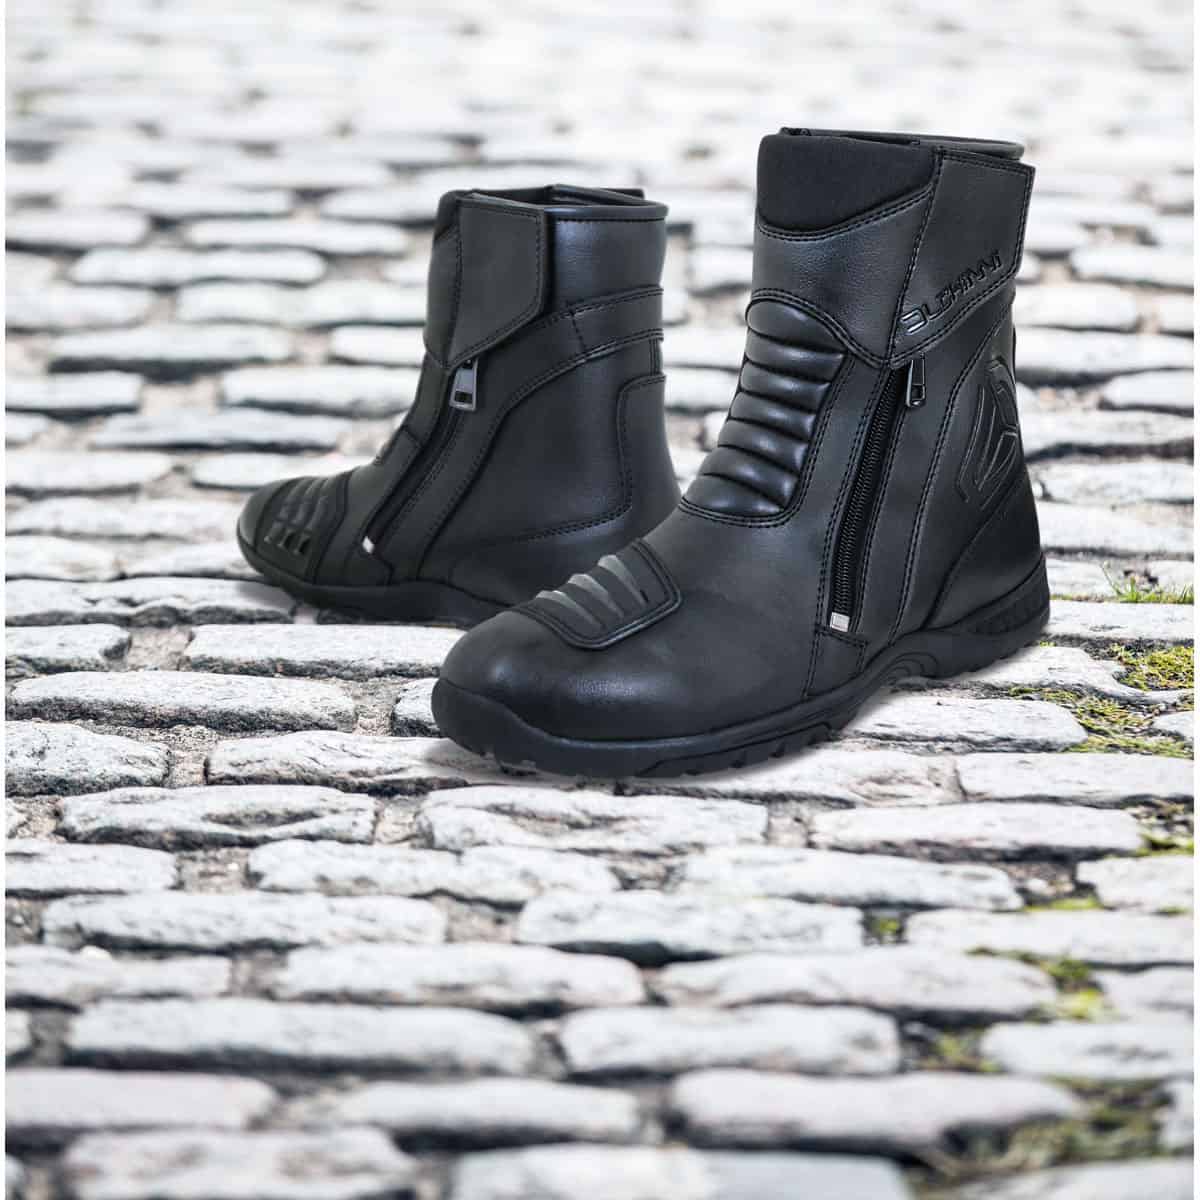 Duchinni Europa Boots Short Waterproof Boots - Black lifestyle